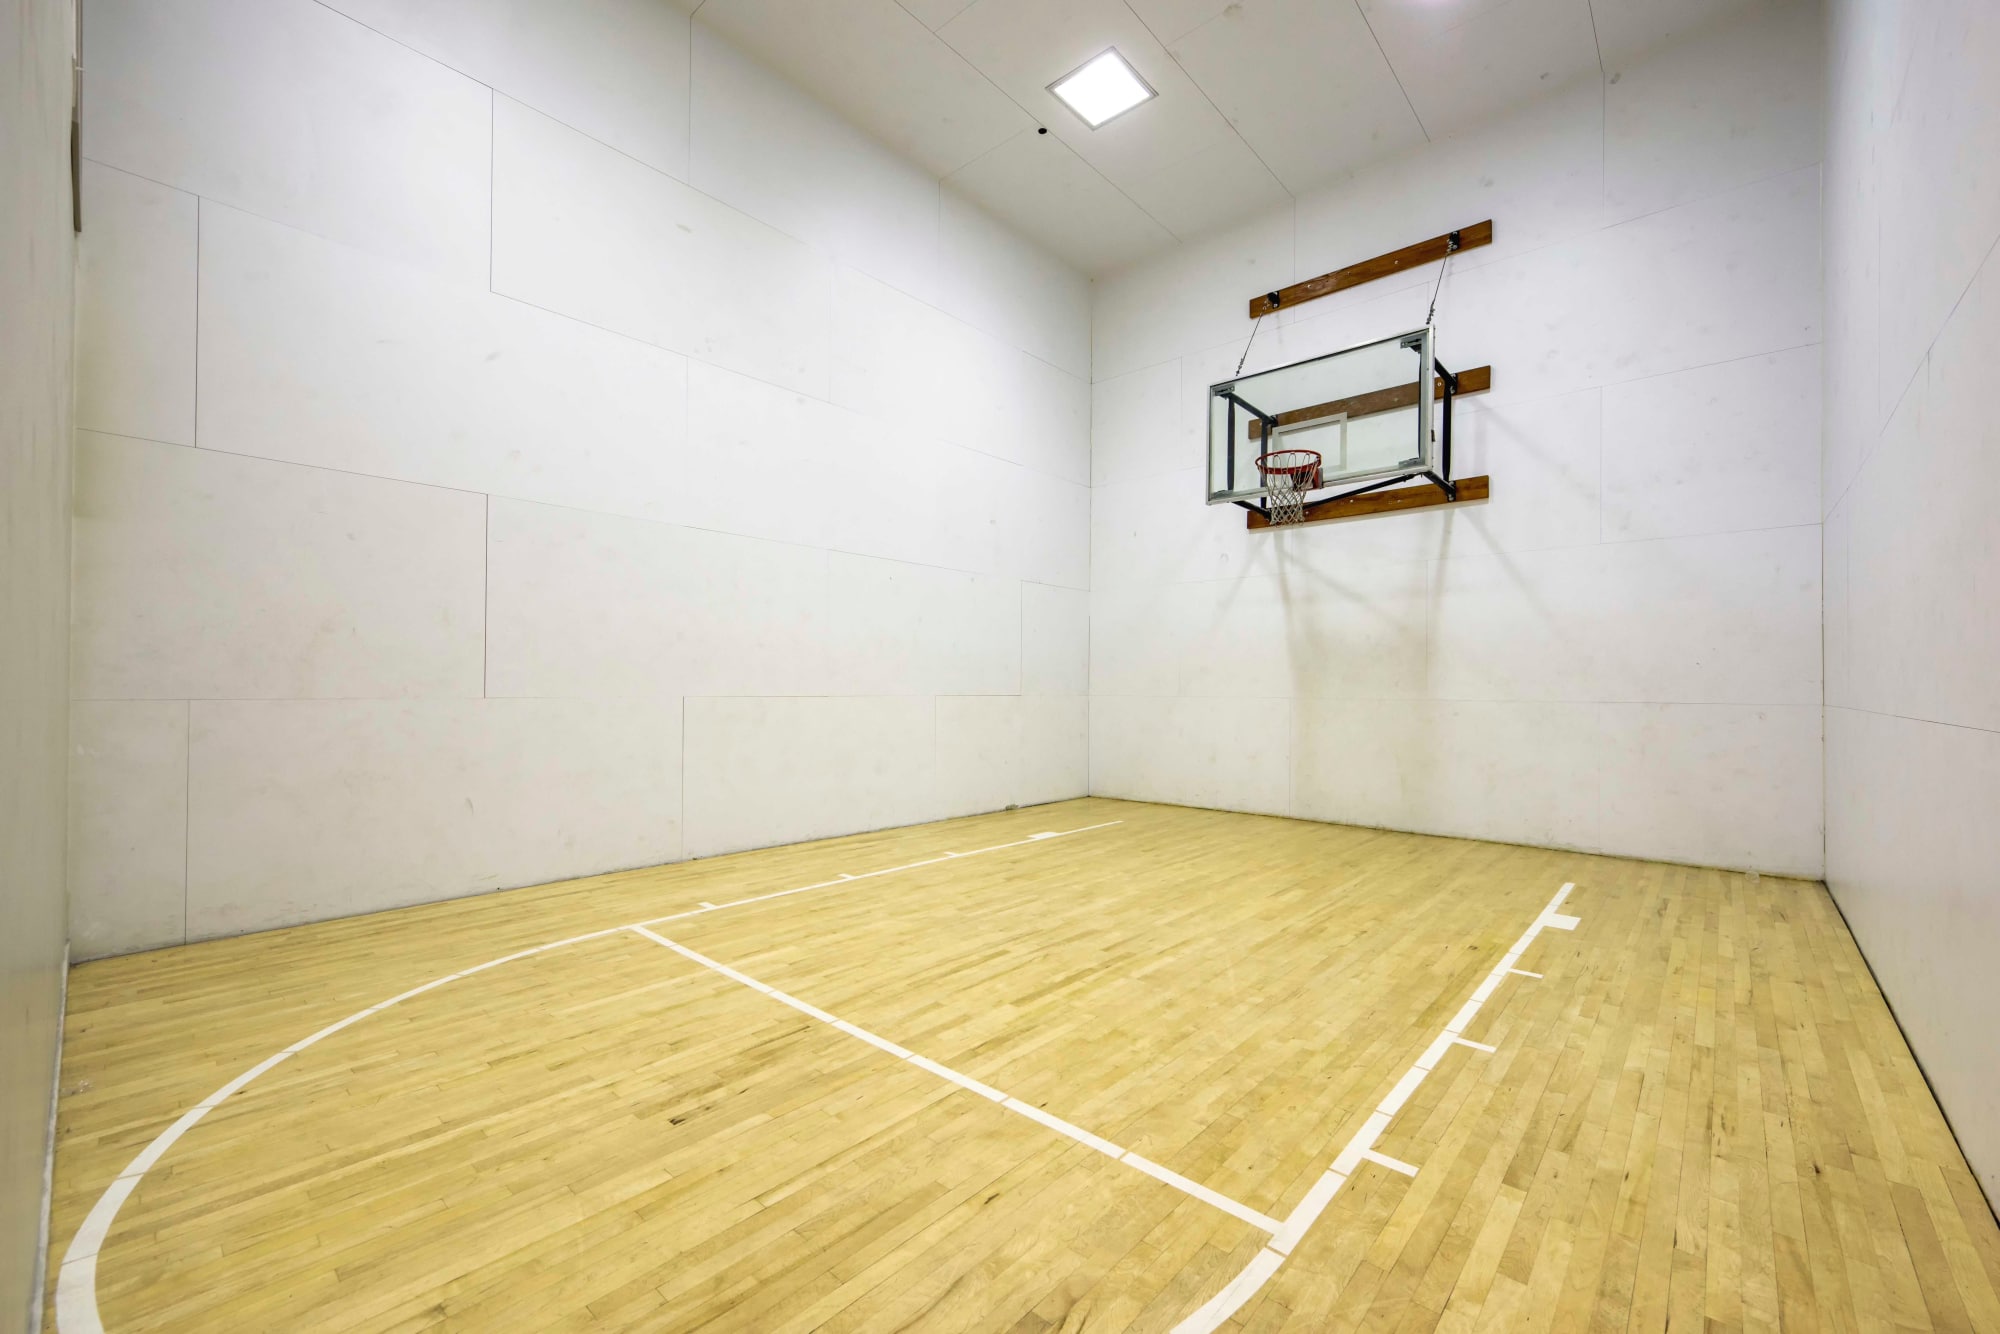 Indoor basketball court at Sierra Del Oro Apartments in Corona, California